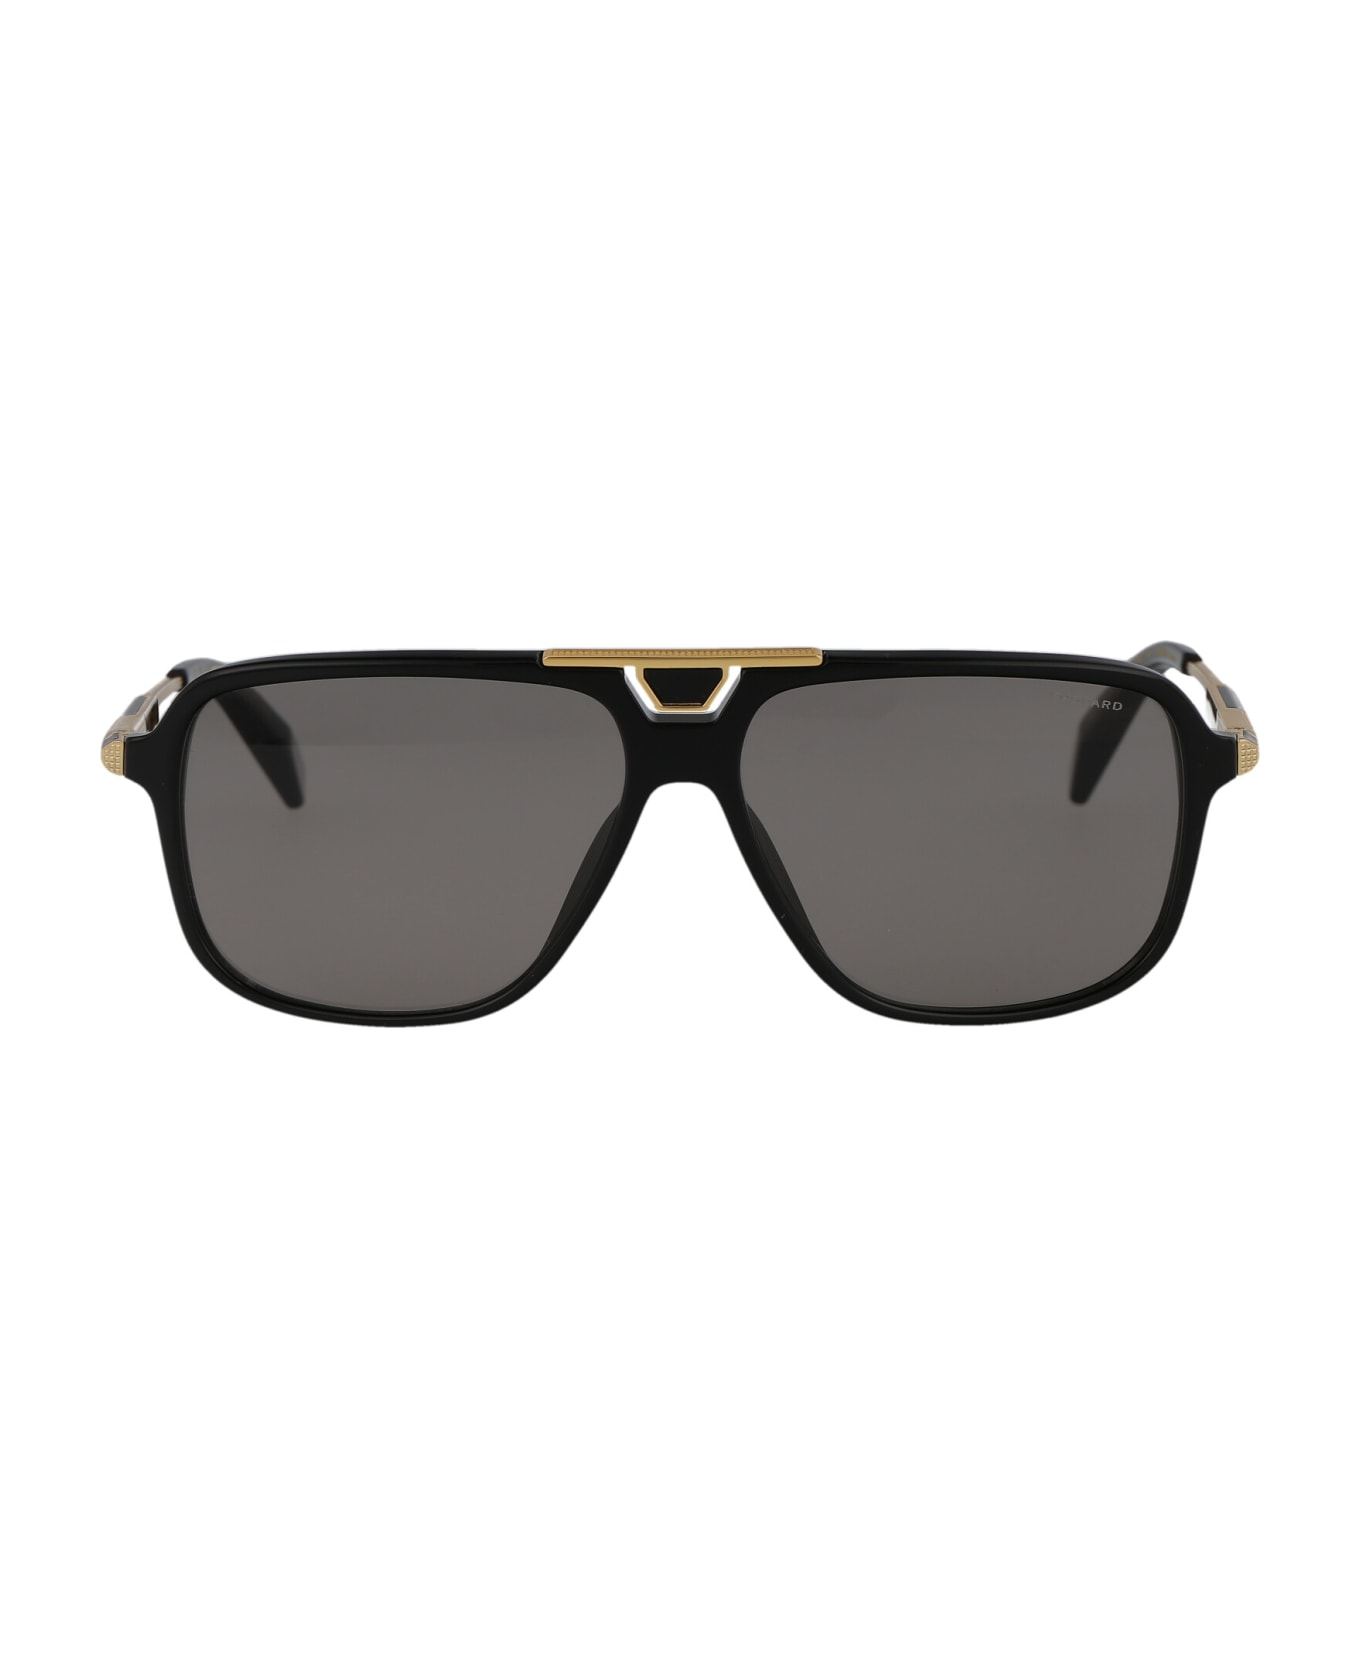 Chopard Sch340 Sunglasses - 700Z BLACK サングラス